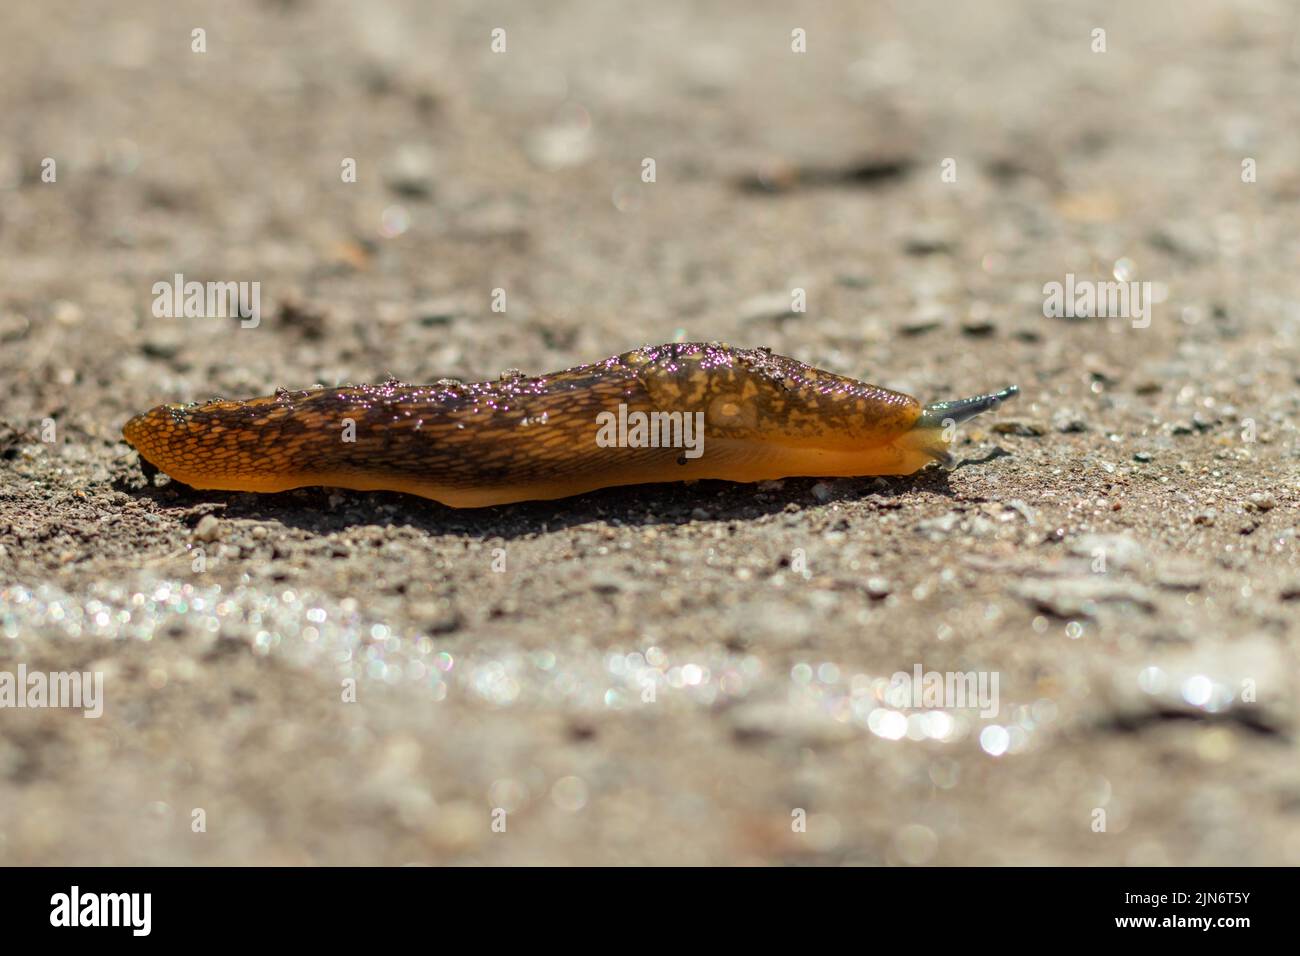 A large slug crawls along the asphalt, close-up. Large snail without shell. Selective focus. Stock Photo